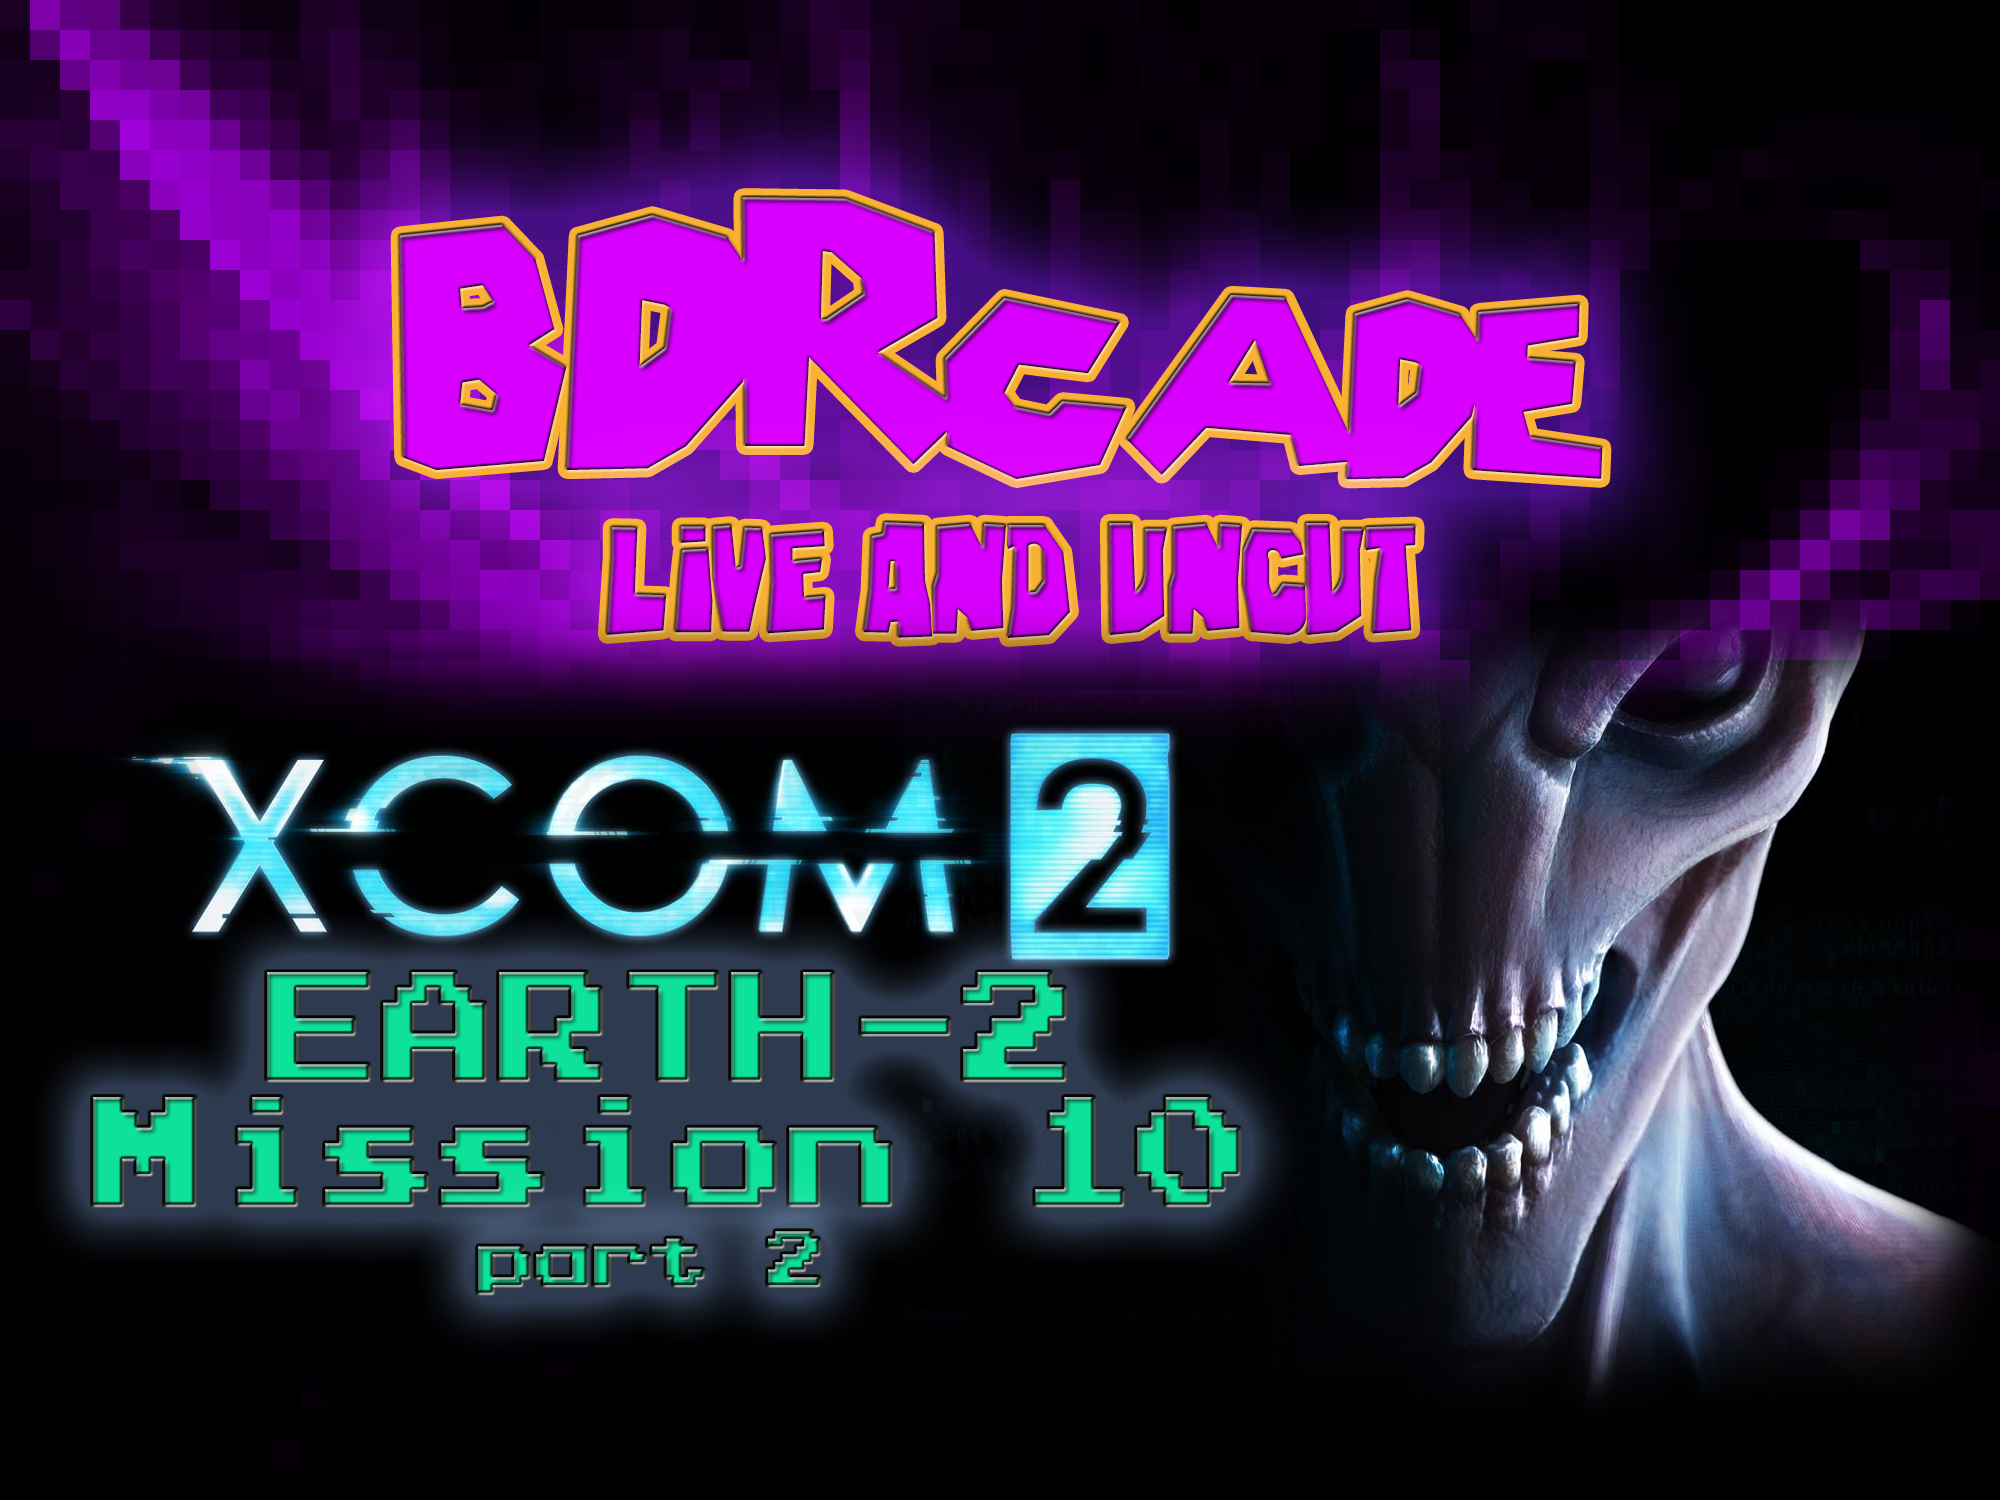 XCOM 2 (Earth-2) : Mission 10 Part 2 – A BDRcade Live Stream